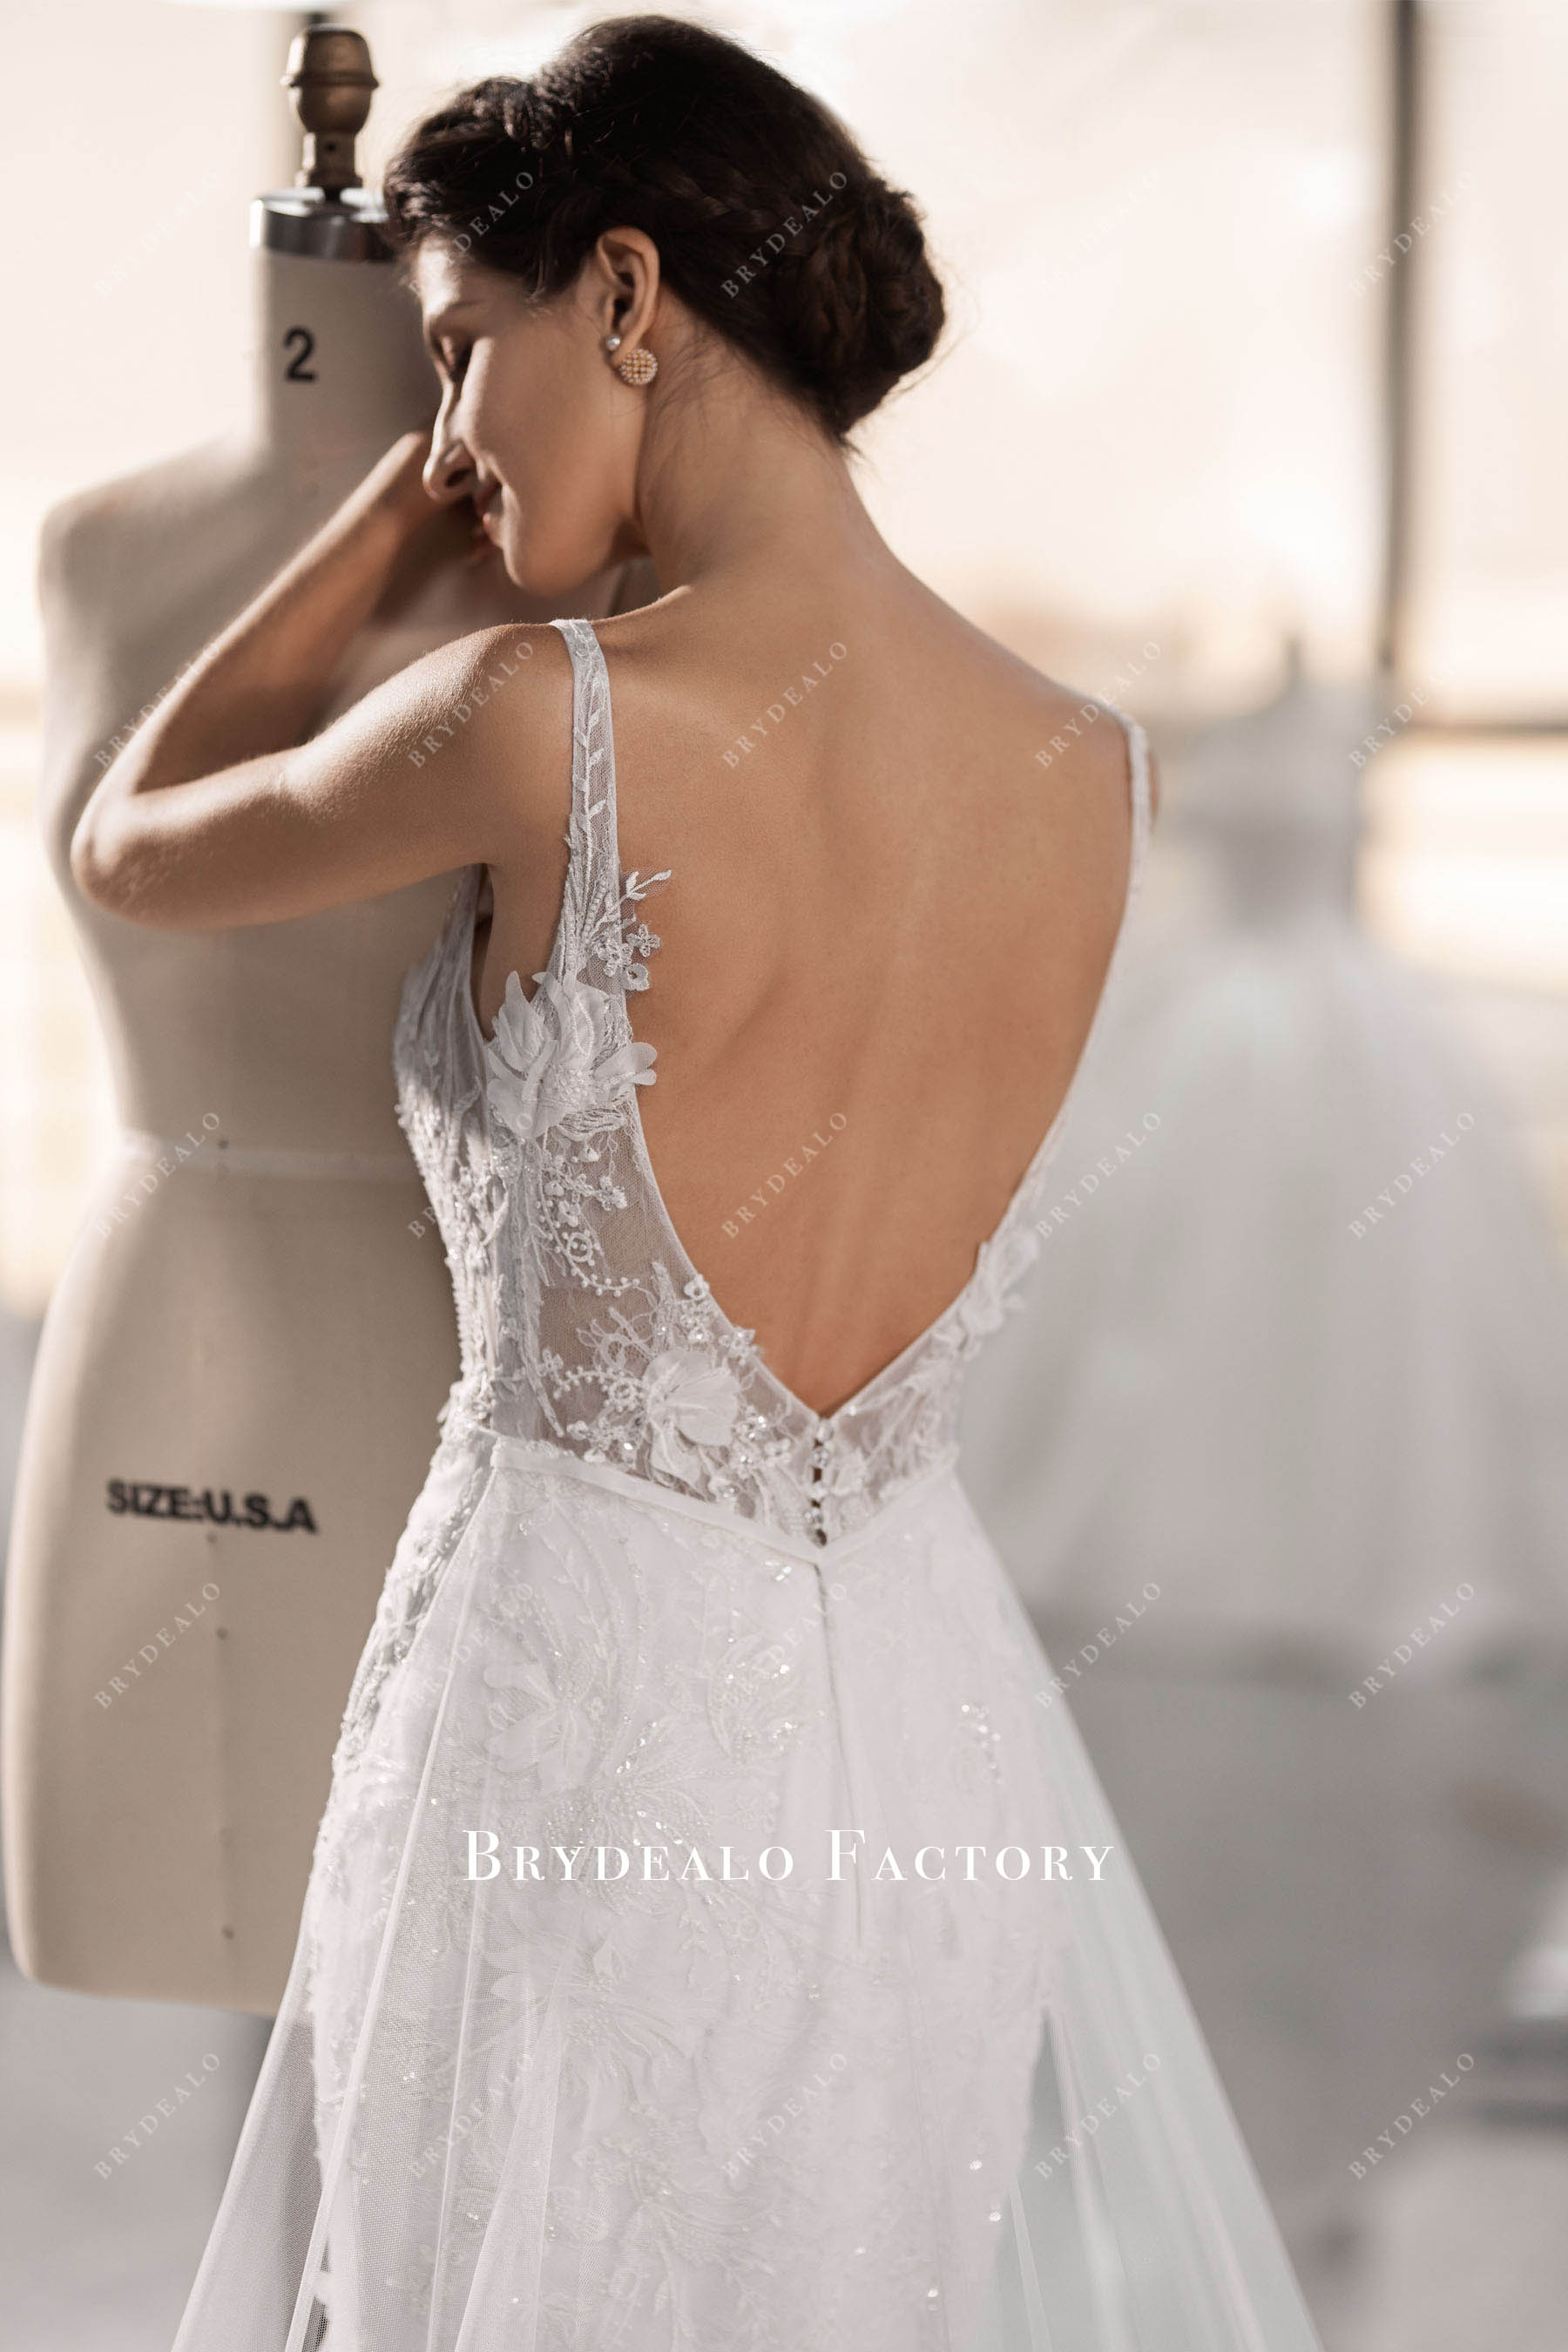 straps V-cut back wedding gown